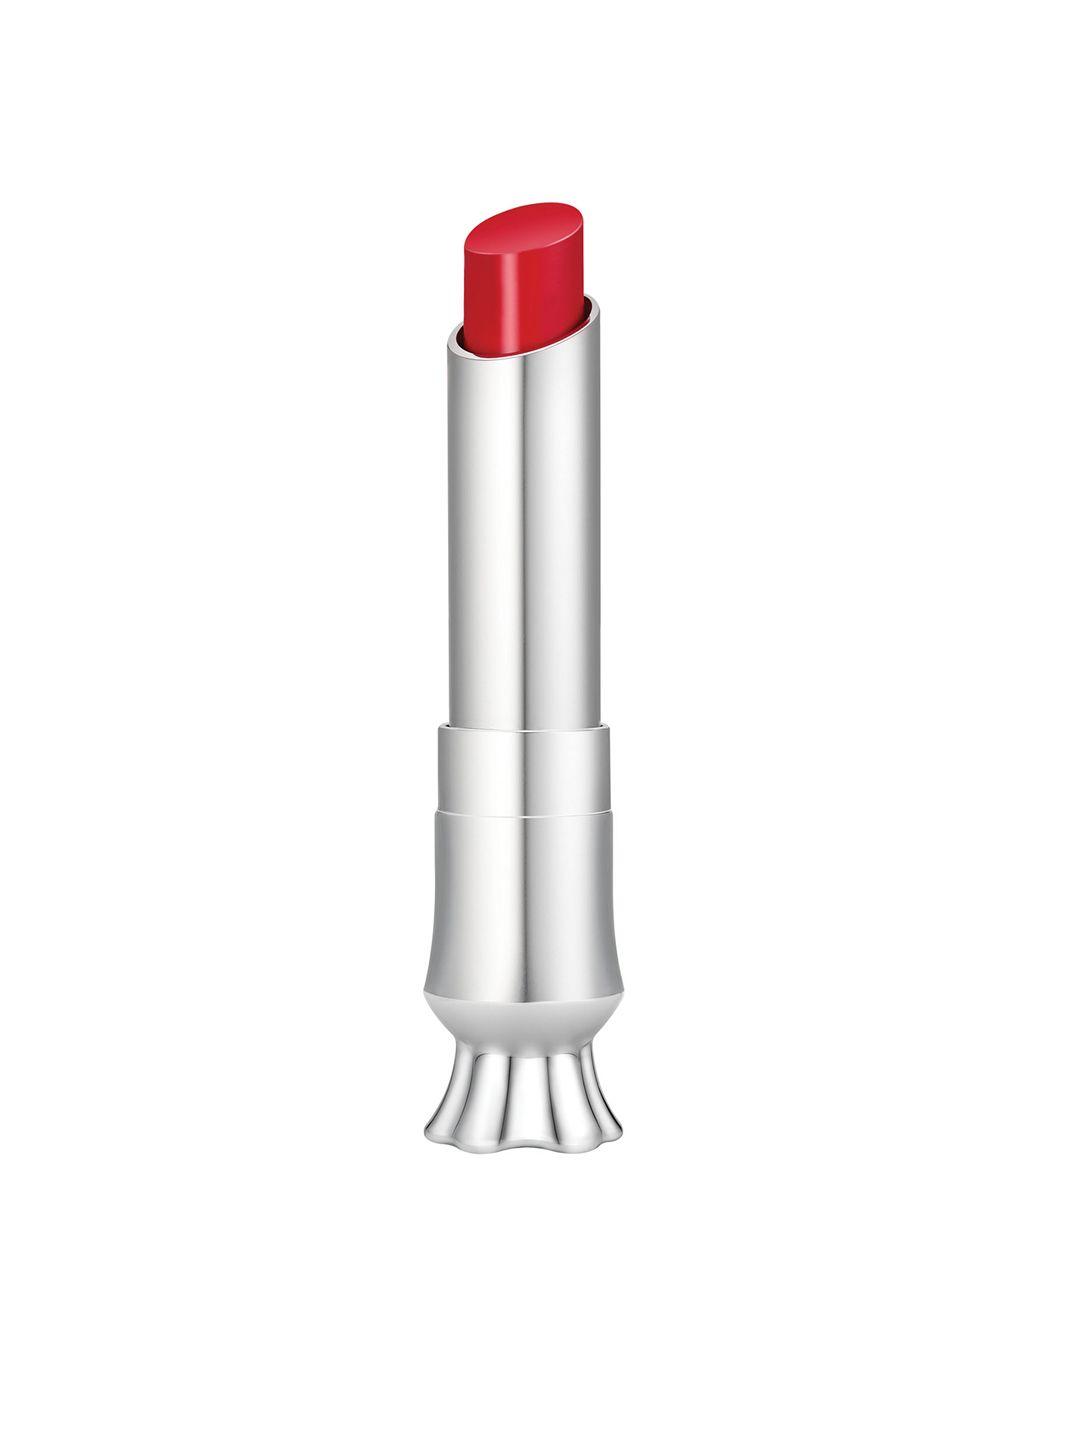 benefit cosmetics california kissin moisturizing color lip balm 3 g - ruby 22